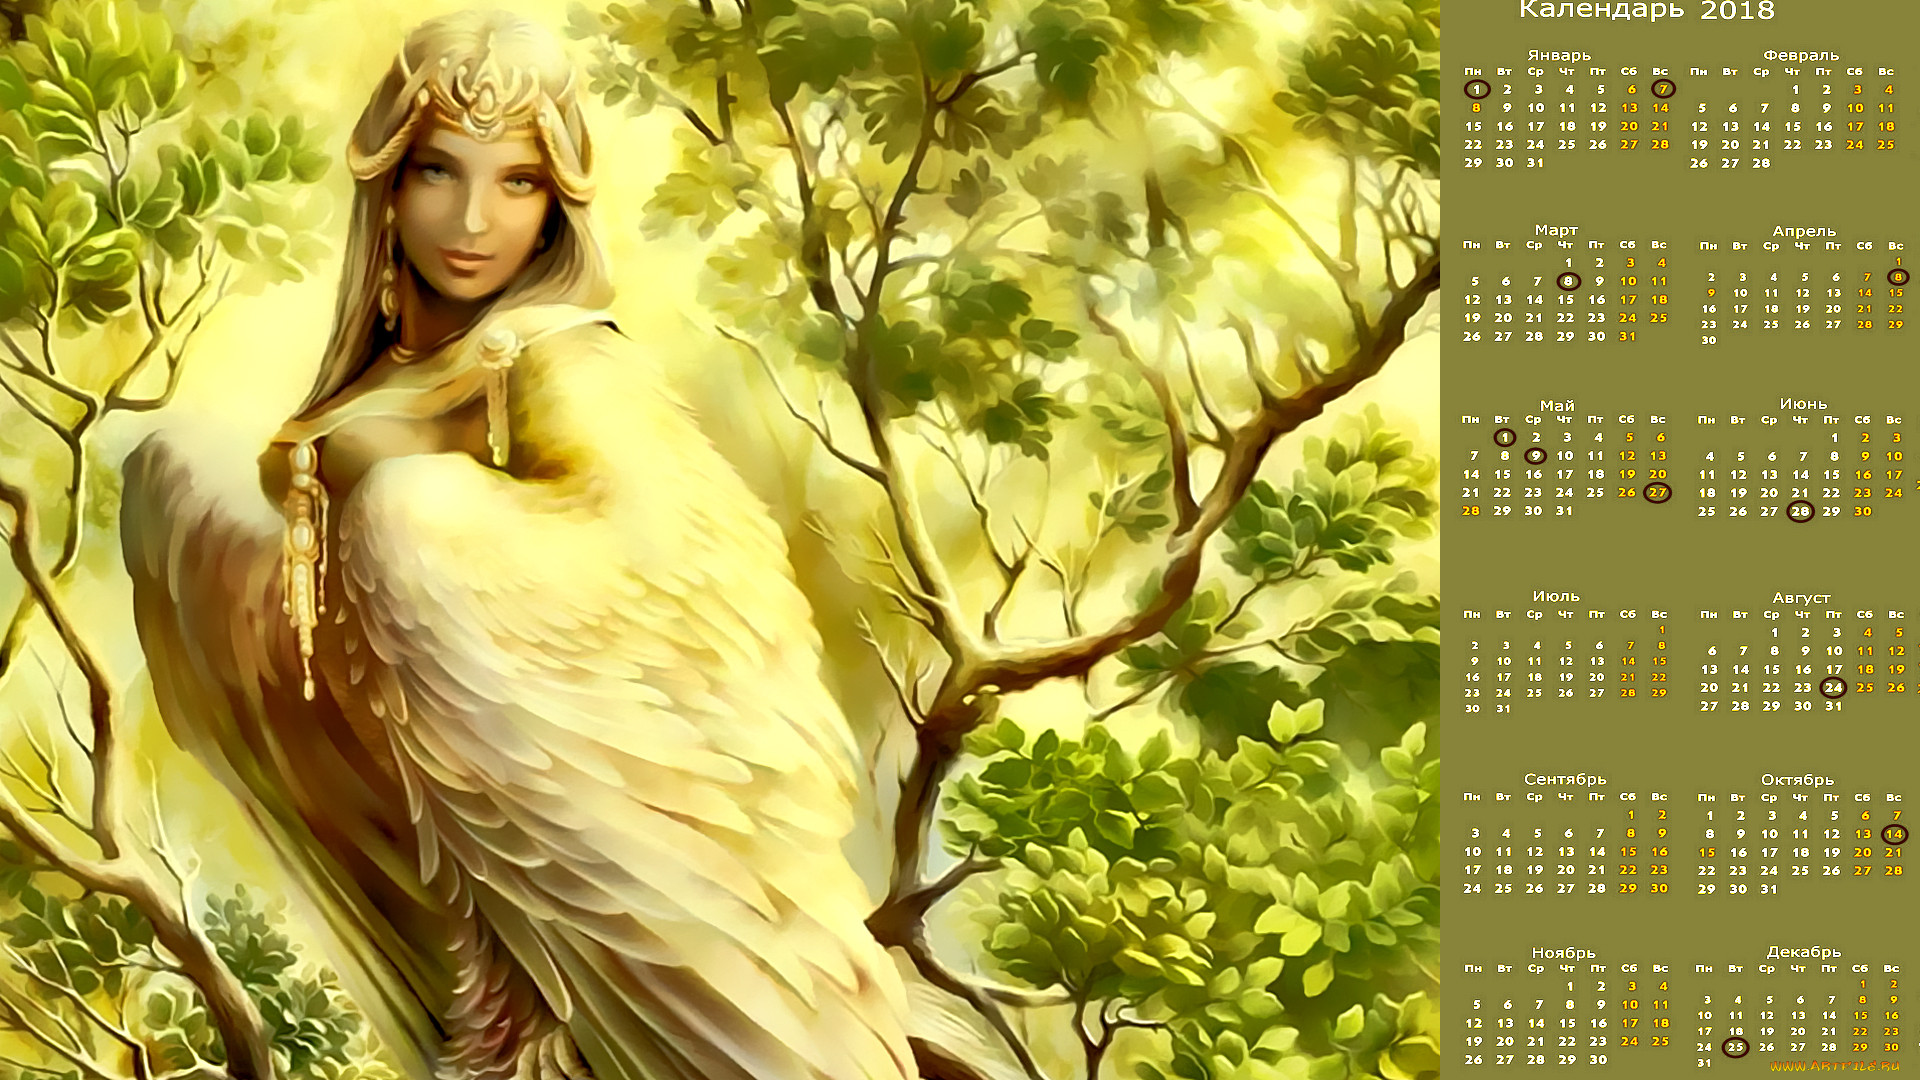 Сказочная птица с человеческим лицом 8 букв. Алконост богиня. Сирин и алконост. Сирин алконост Гамаюн. Славянская птица алконост.